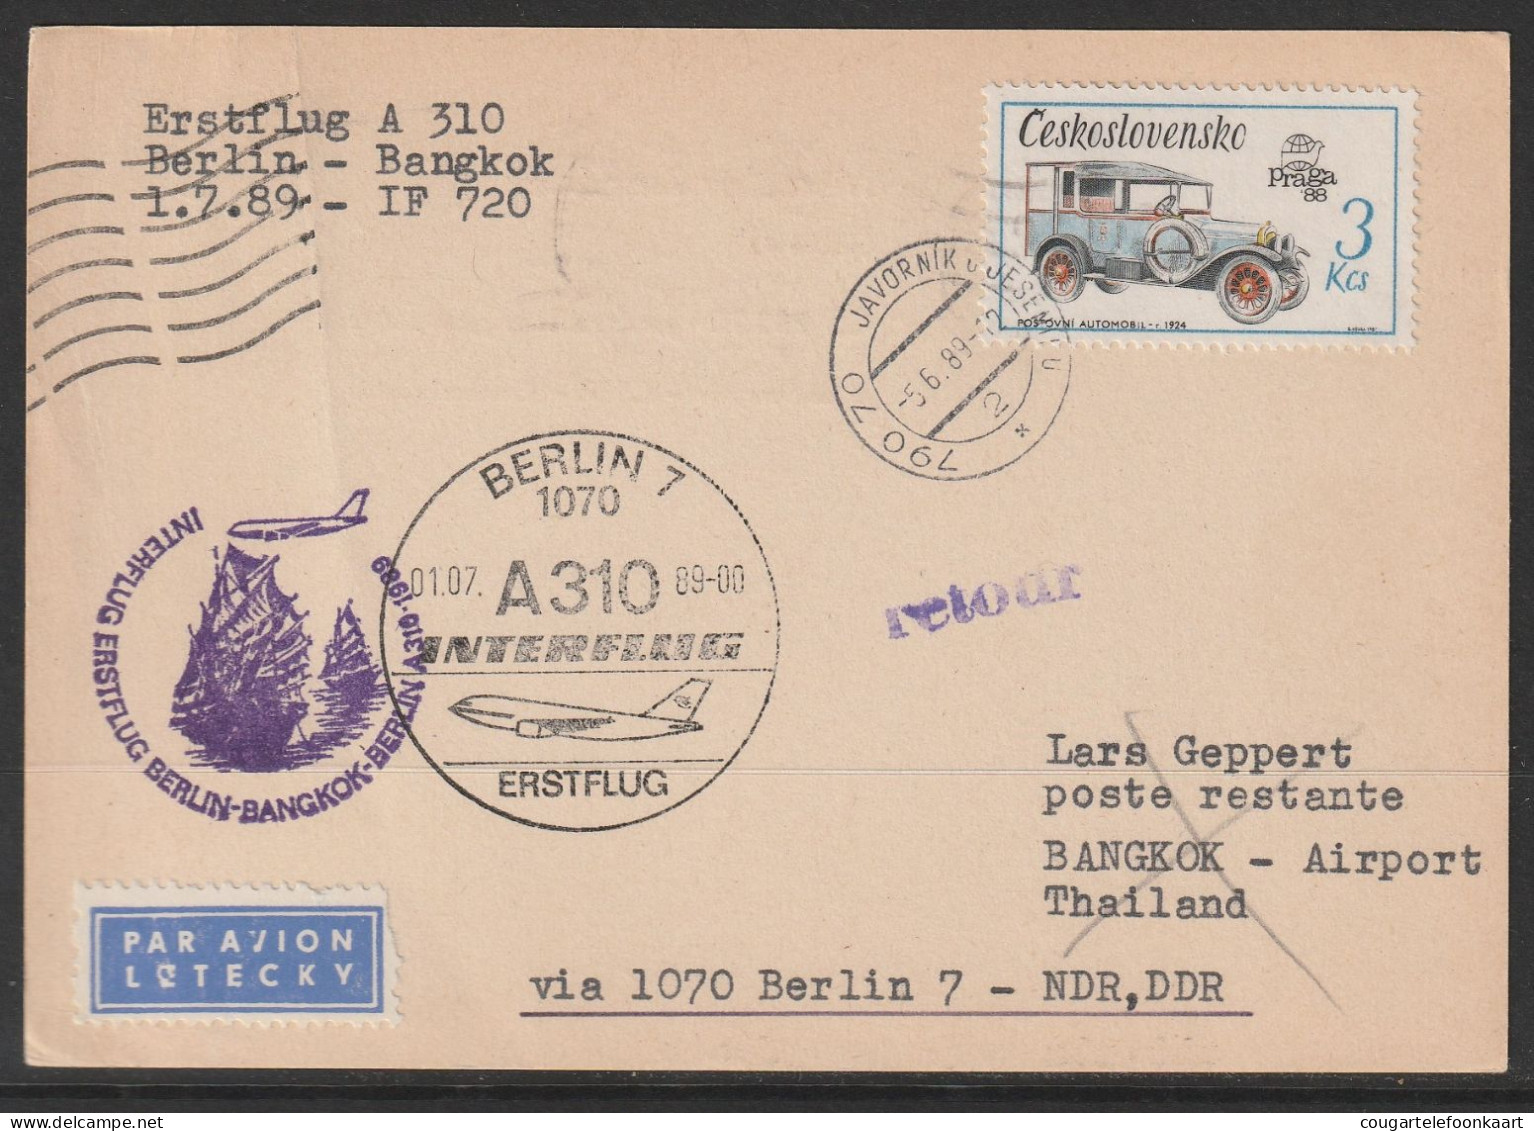 1989, Interflug, First Flight Card, Javornik-Bangkok, Feeder Mail - Luftpost